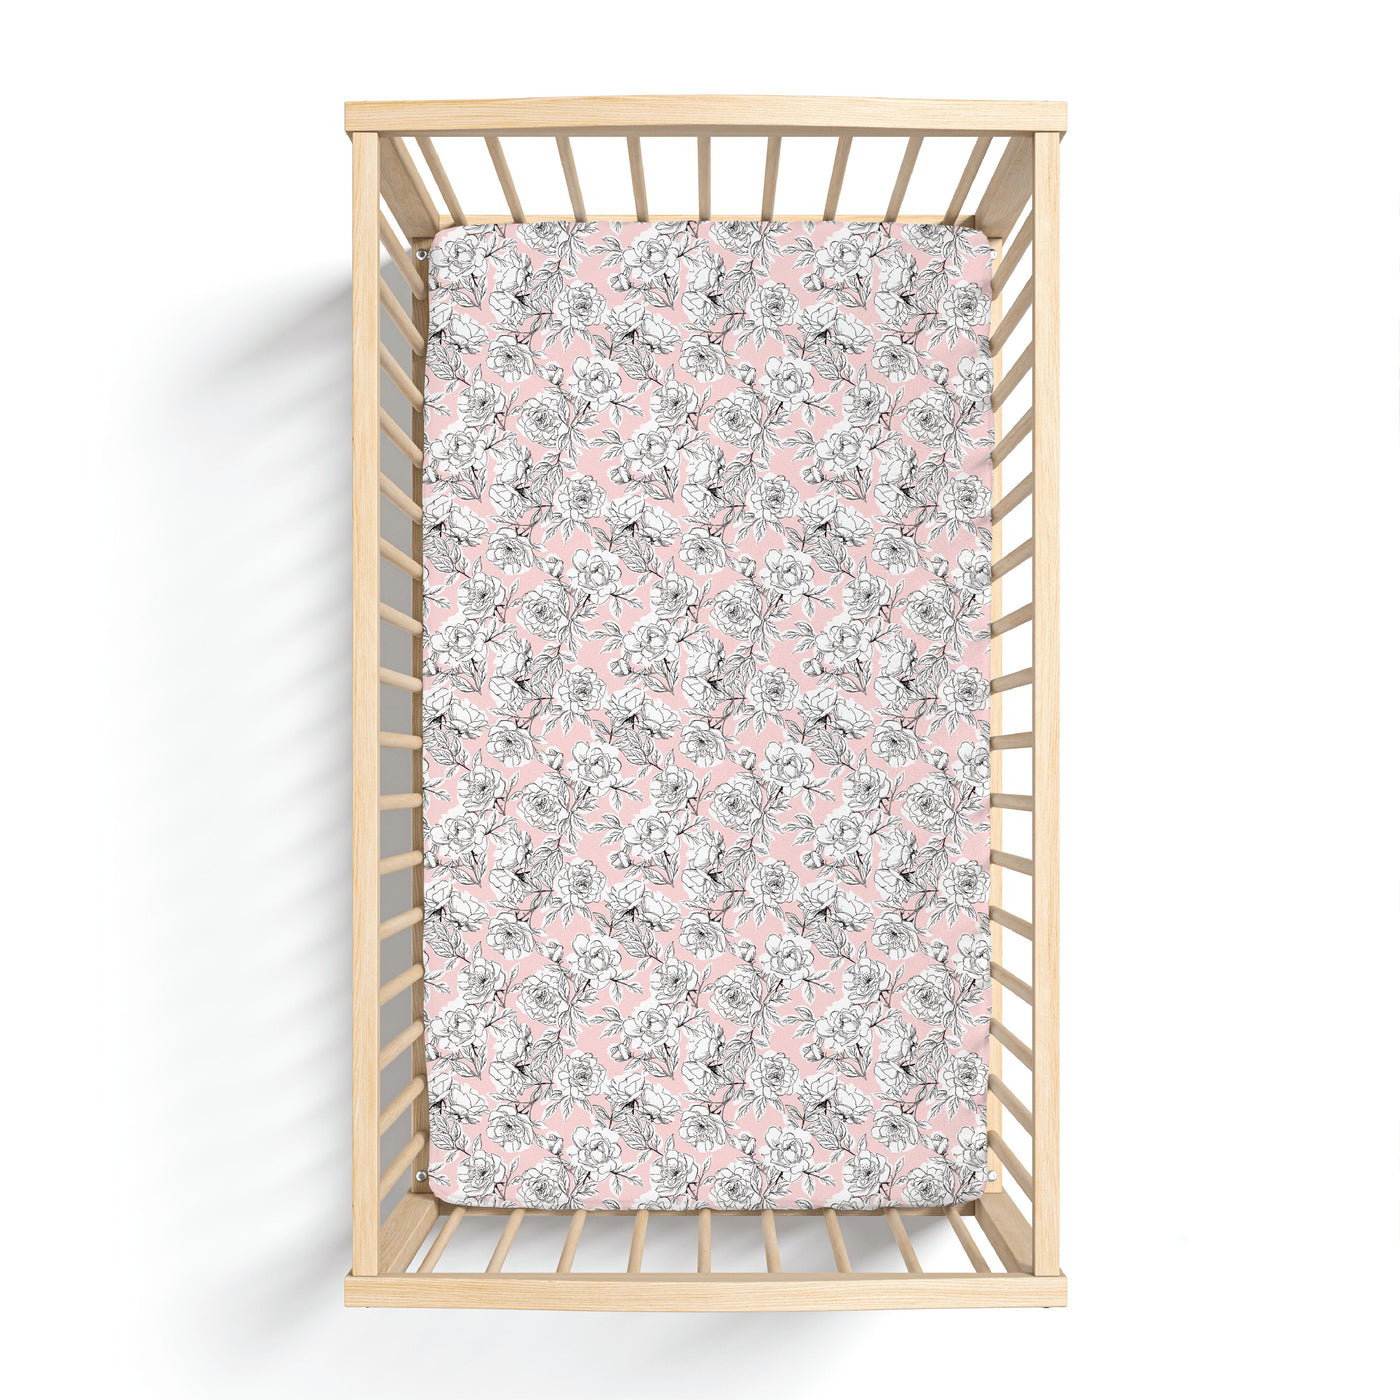 Laree + Co: Allie Floral Bamboo Crib Sheet